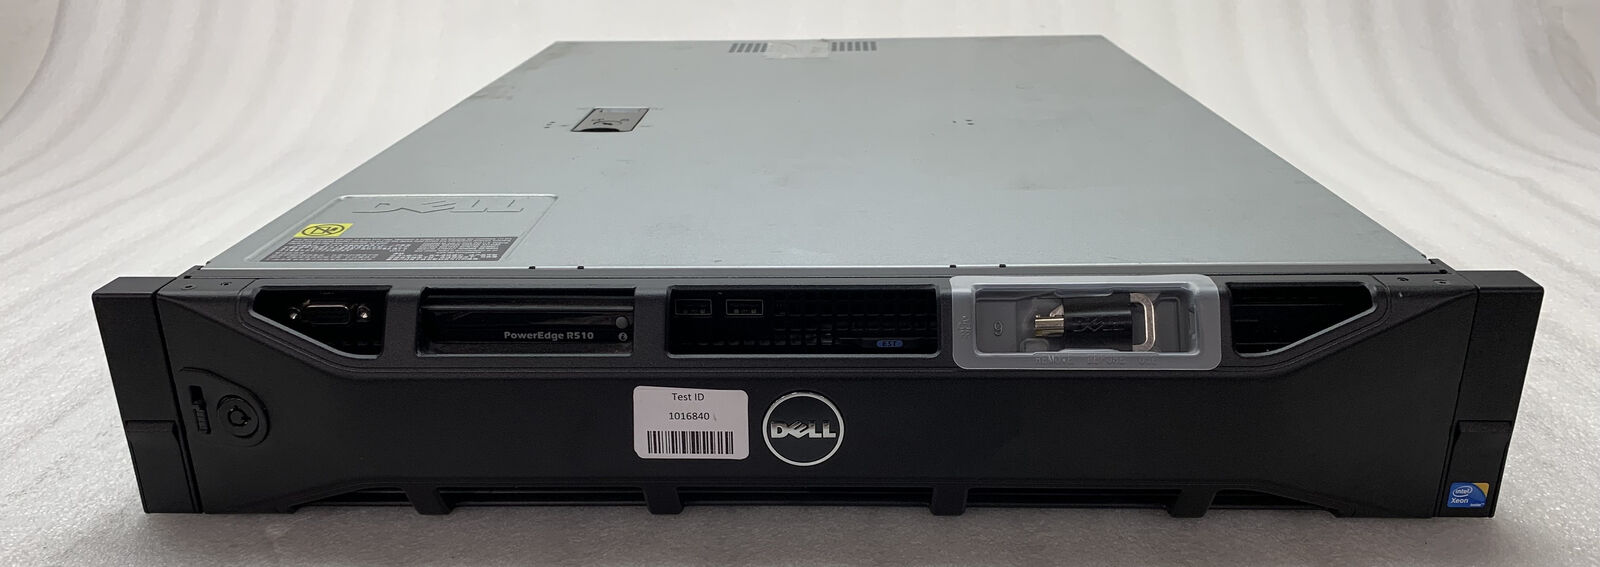 Dell PowerEdge R510 Server BOOTS 2x Xeon E5520 @ 2.70GHz 32GB RAM NO HDD/OS